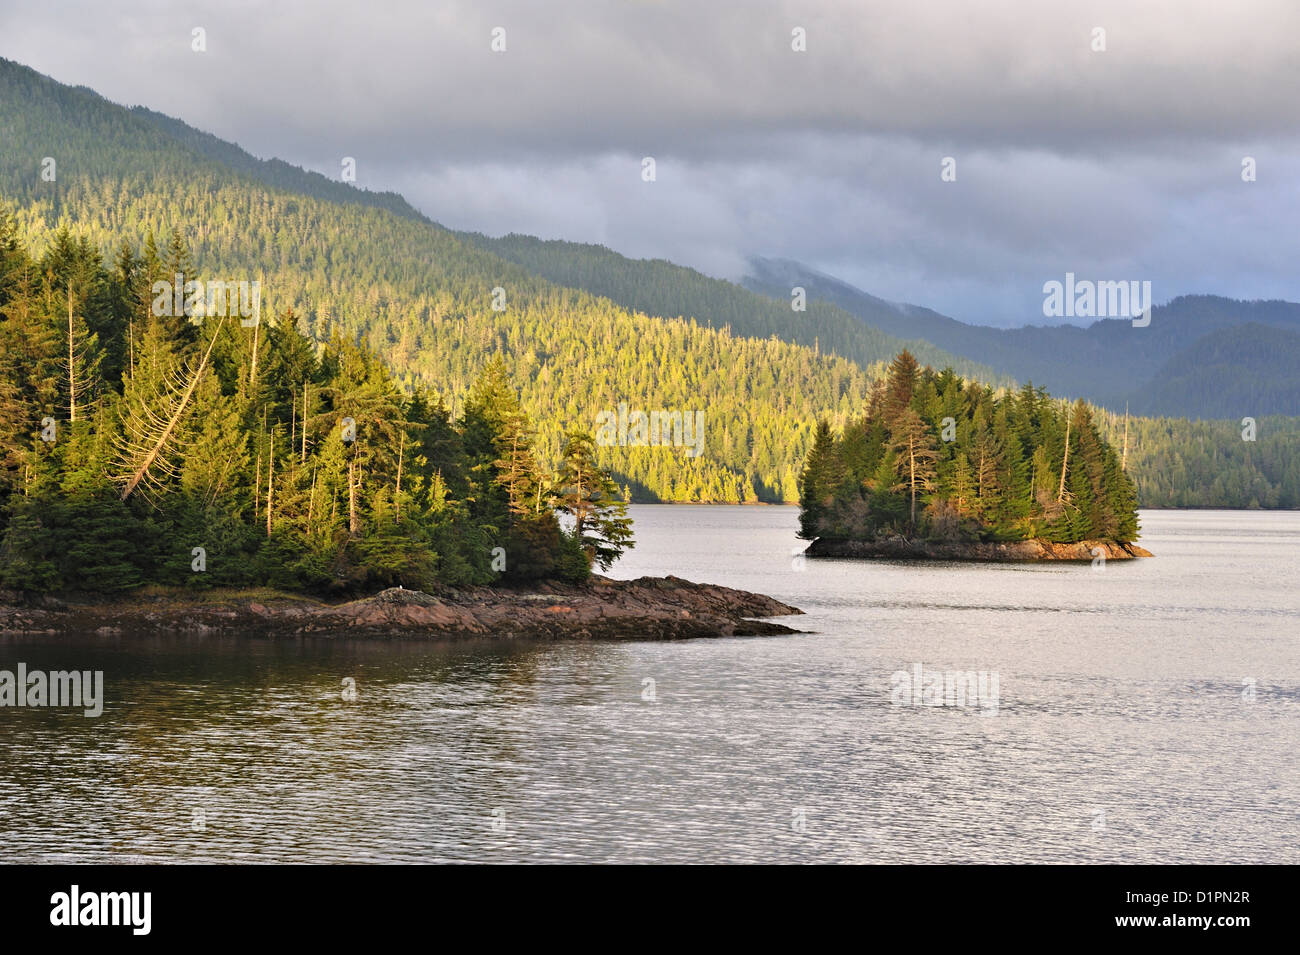 Archipelago of small islands around Prince Rupert, British Columbia, Canada Stock Photo